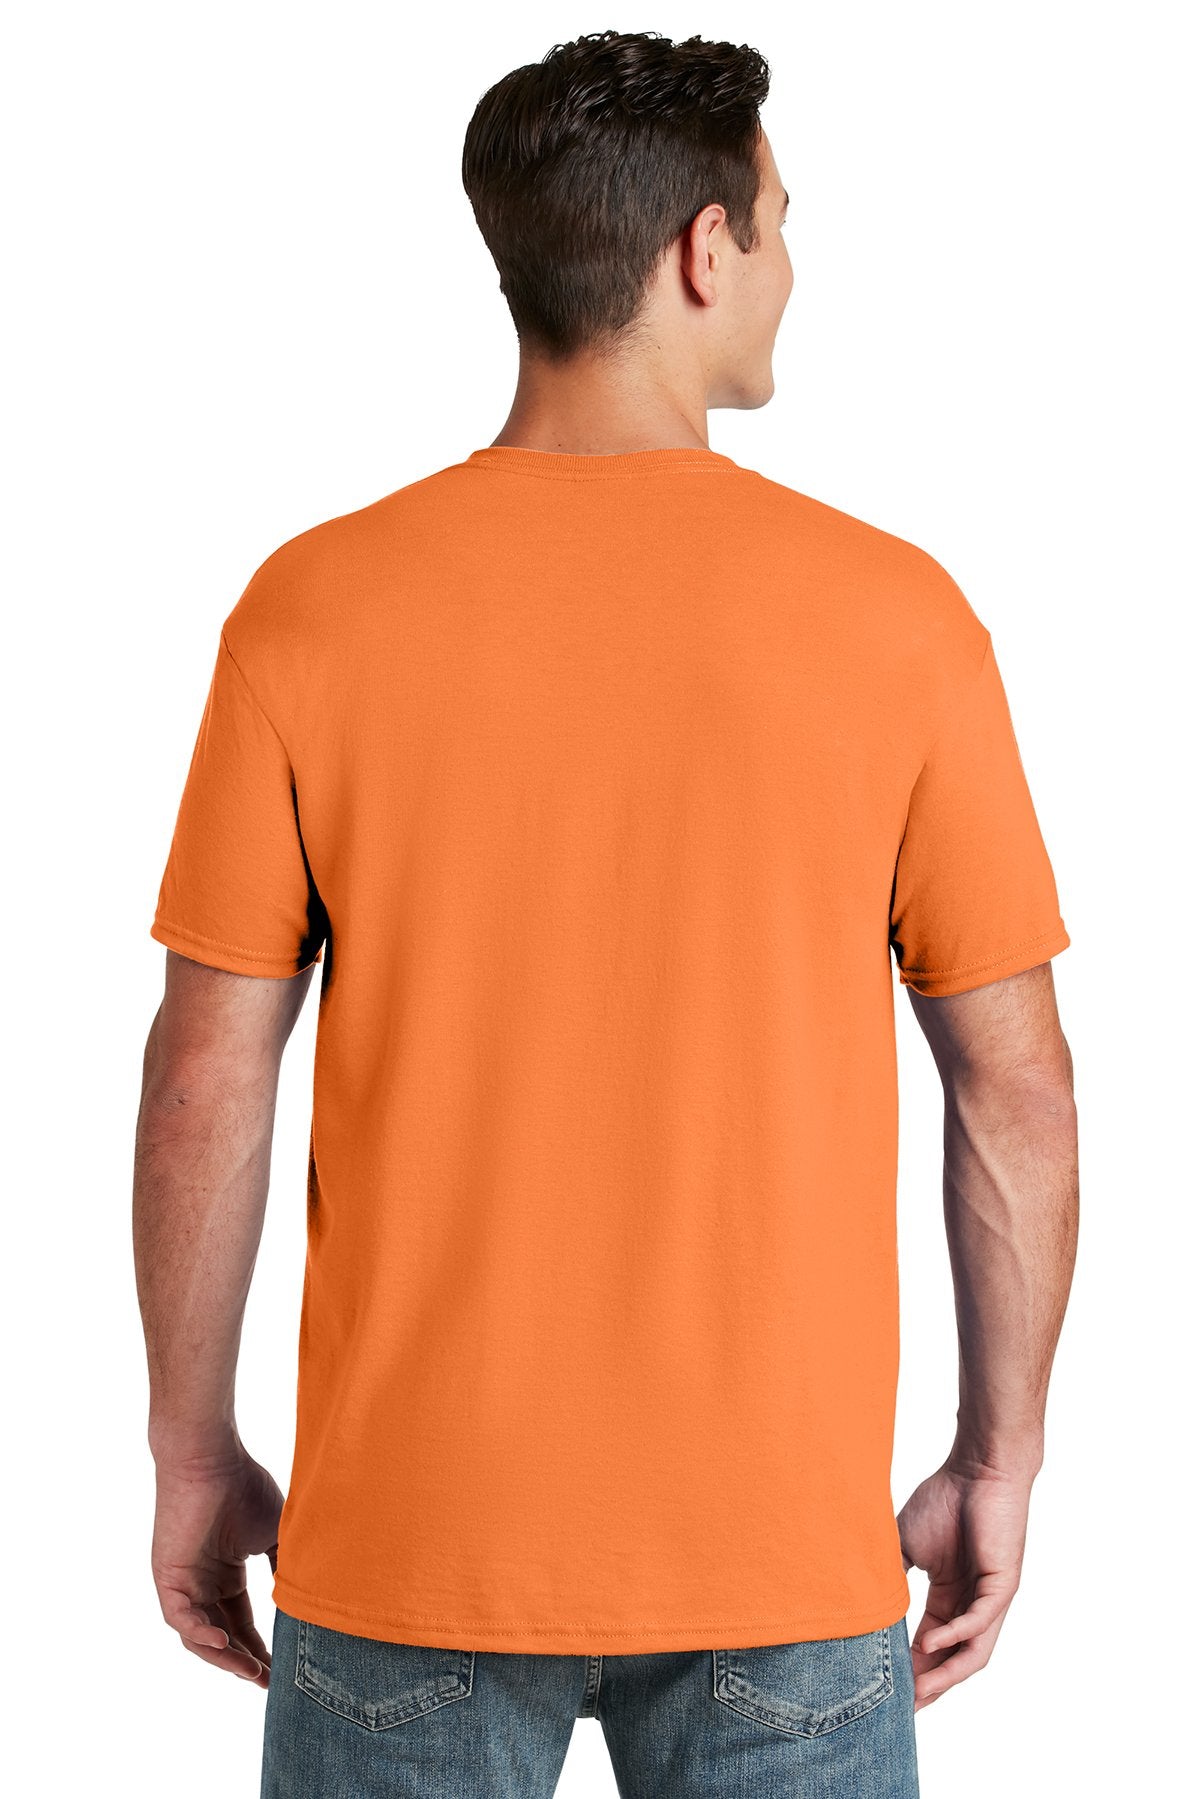 Jerzees Dri-Power Active 50/50 Cotton/Poly T-Shirt 29M Safety Orange